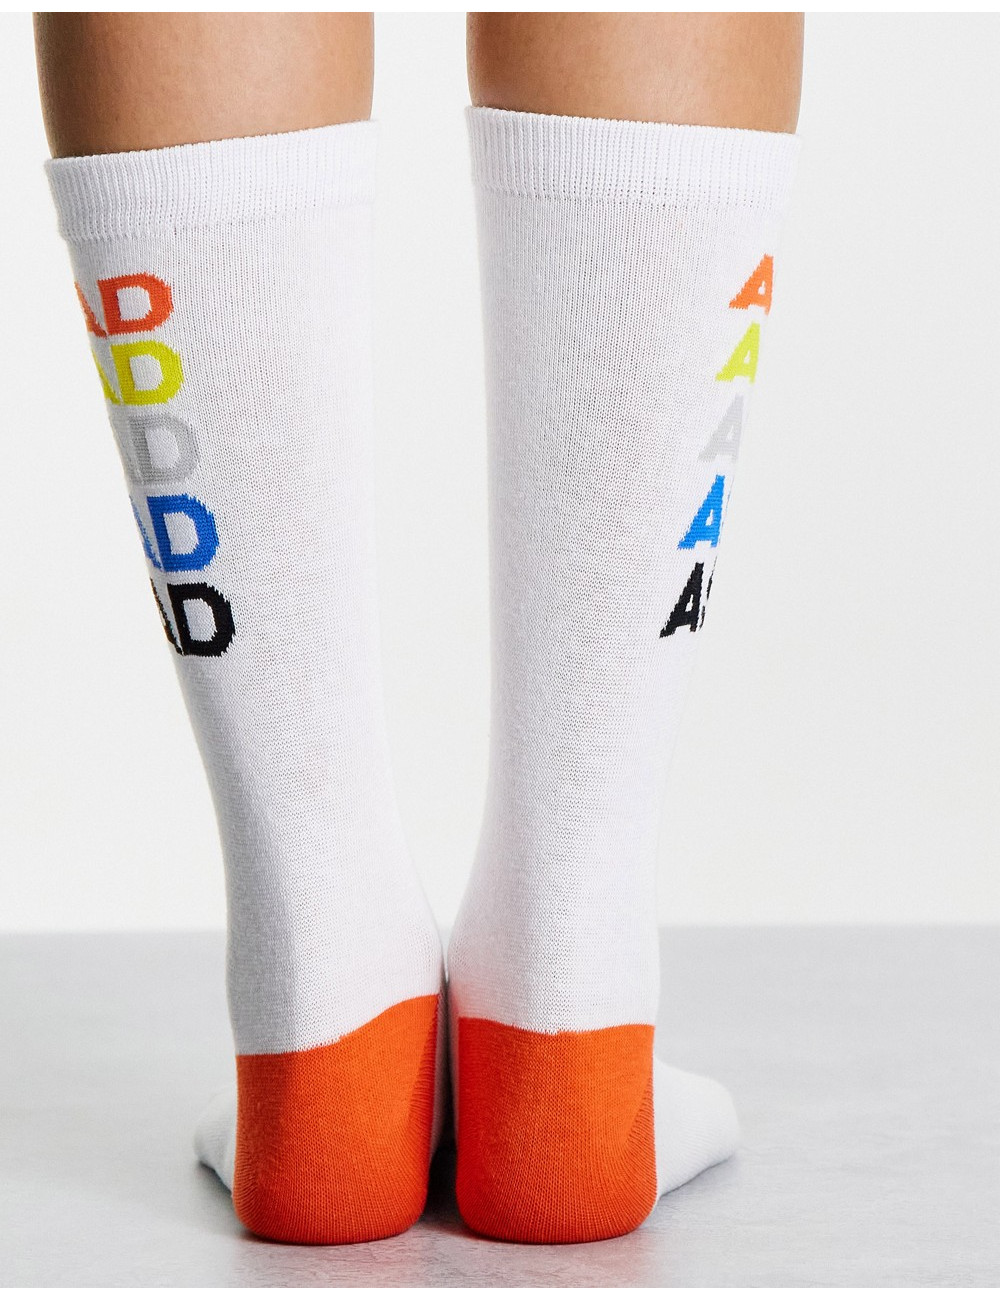 Typo socks with rainbow...